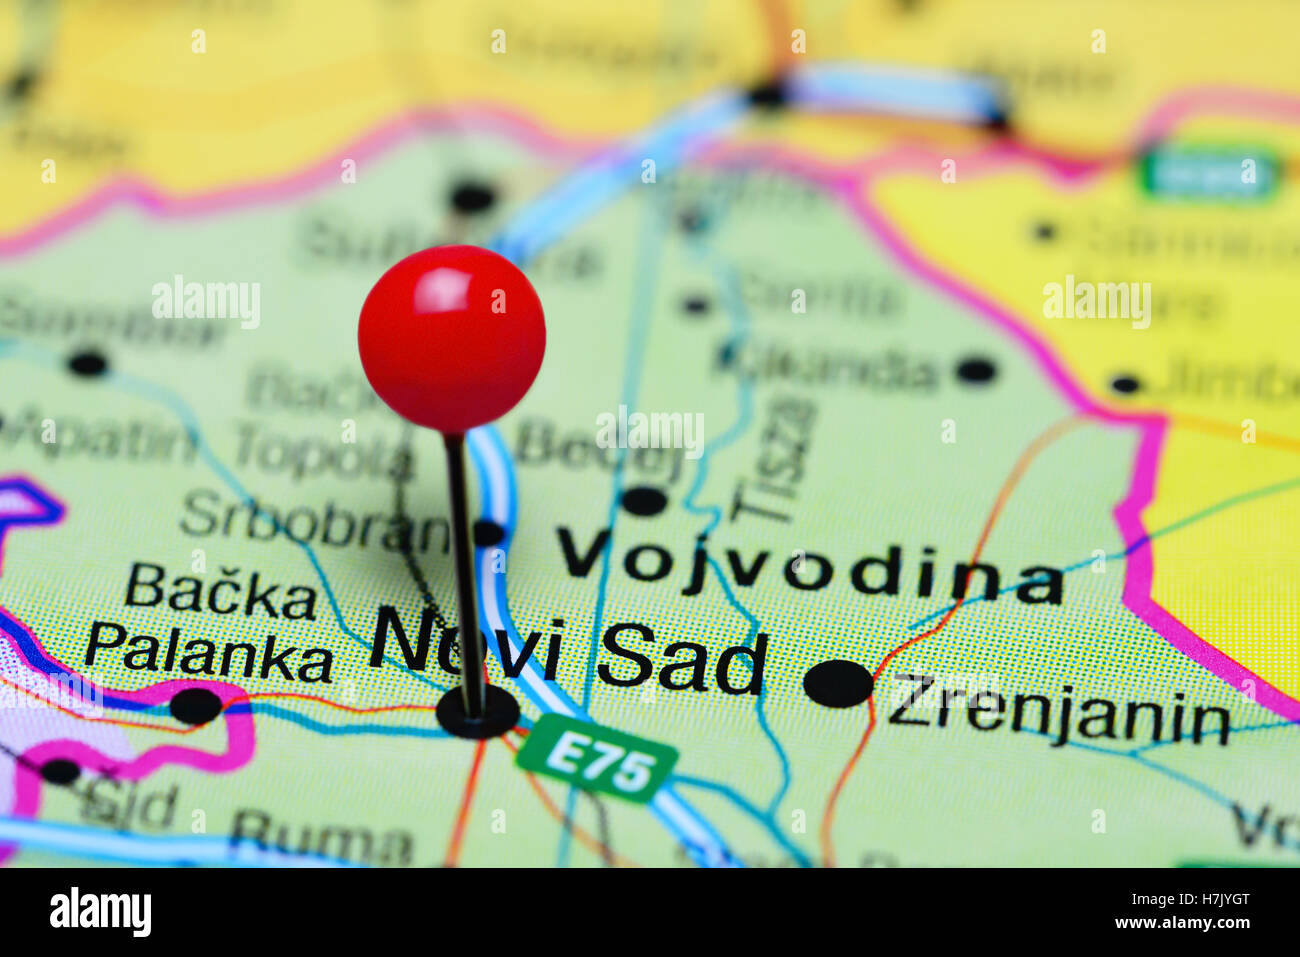 Novi Sad pinned on a map of Serbia Stock Photo